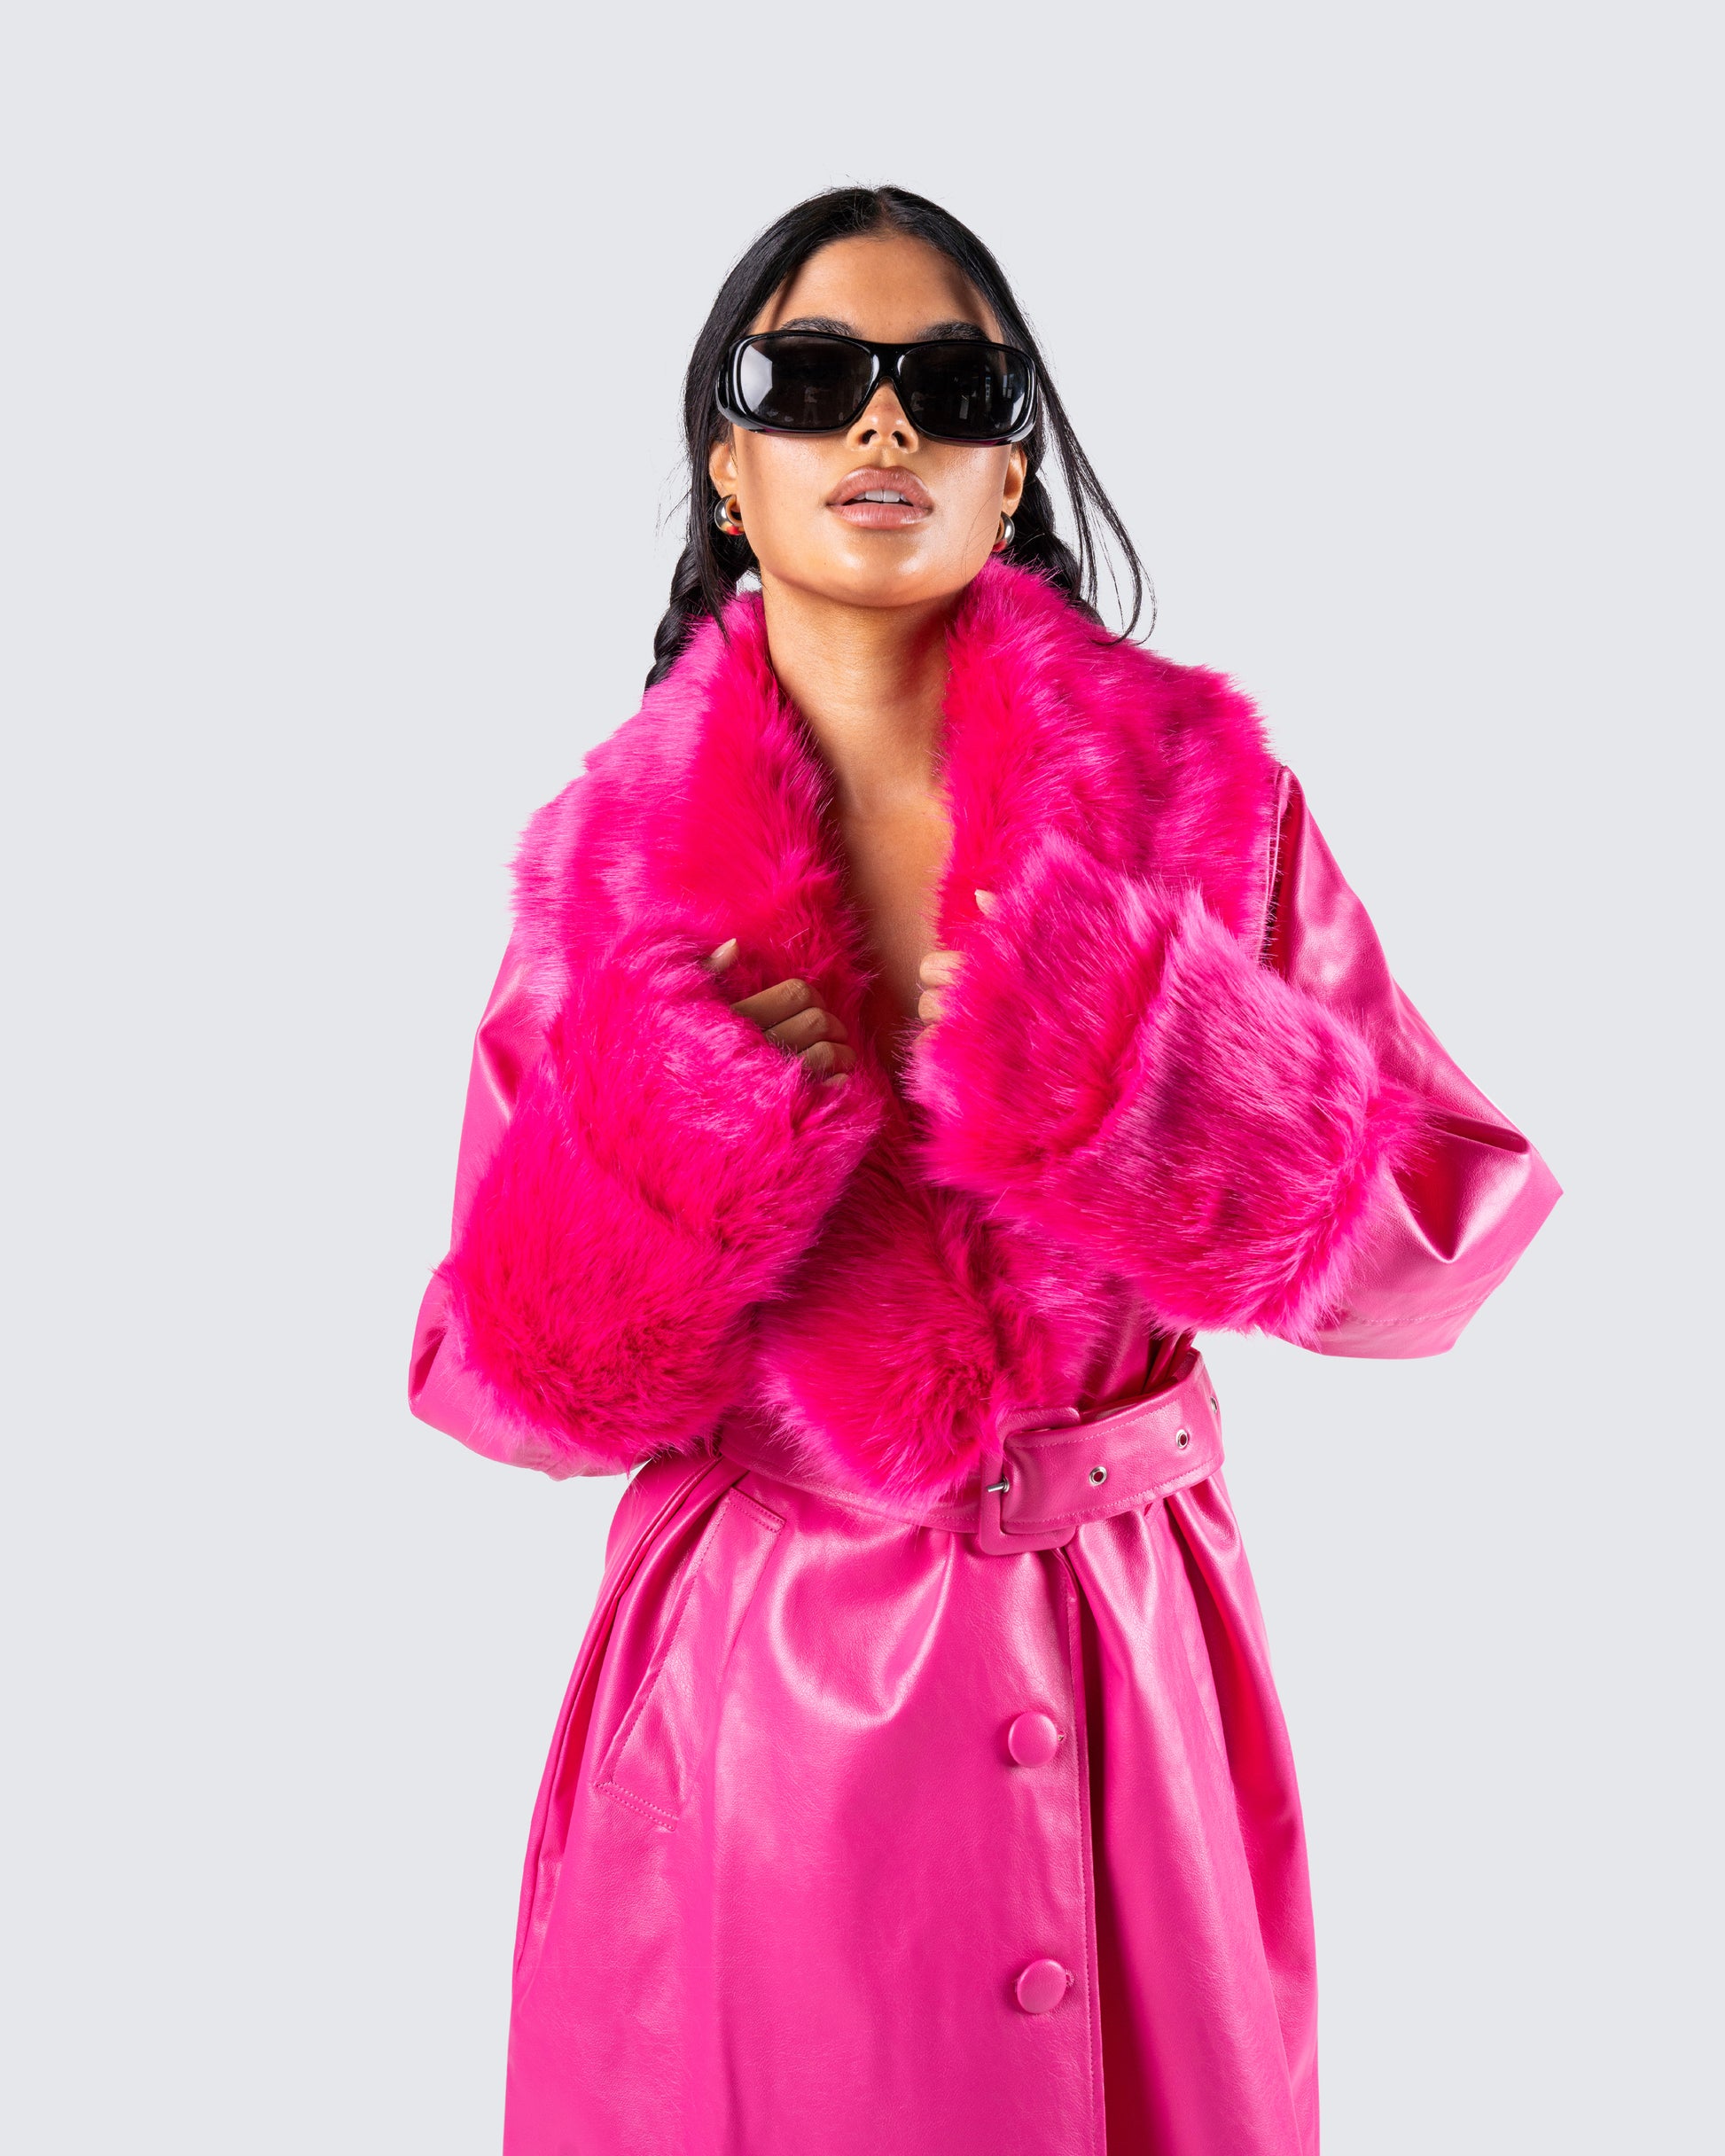 XKLVMH Coats For Women Jackets For Girls Fur Coats For Women Fur